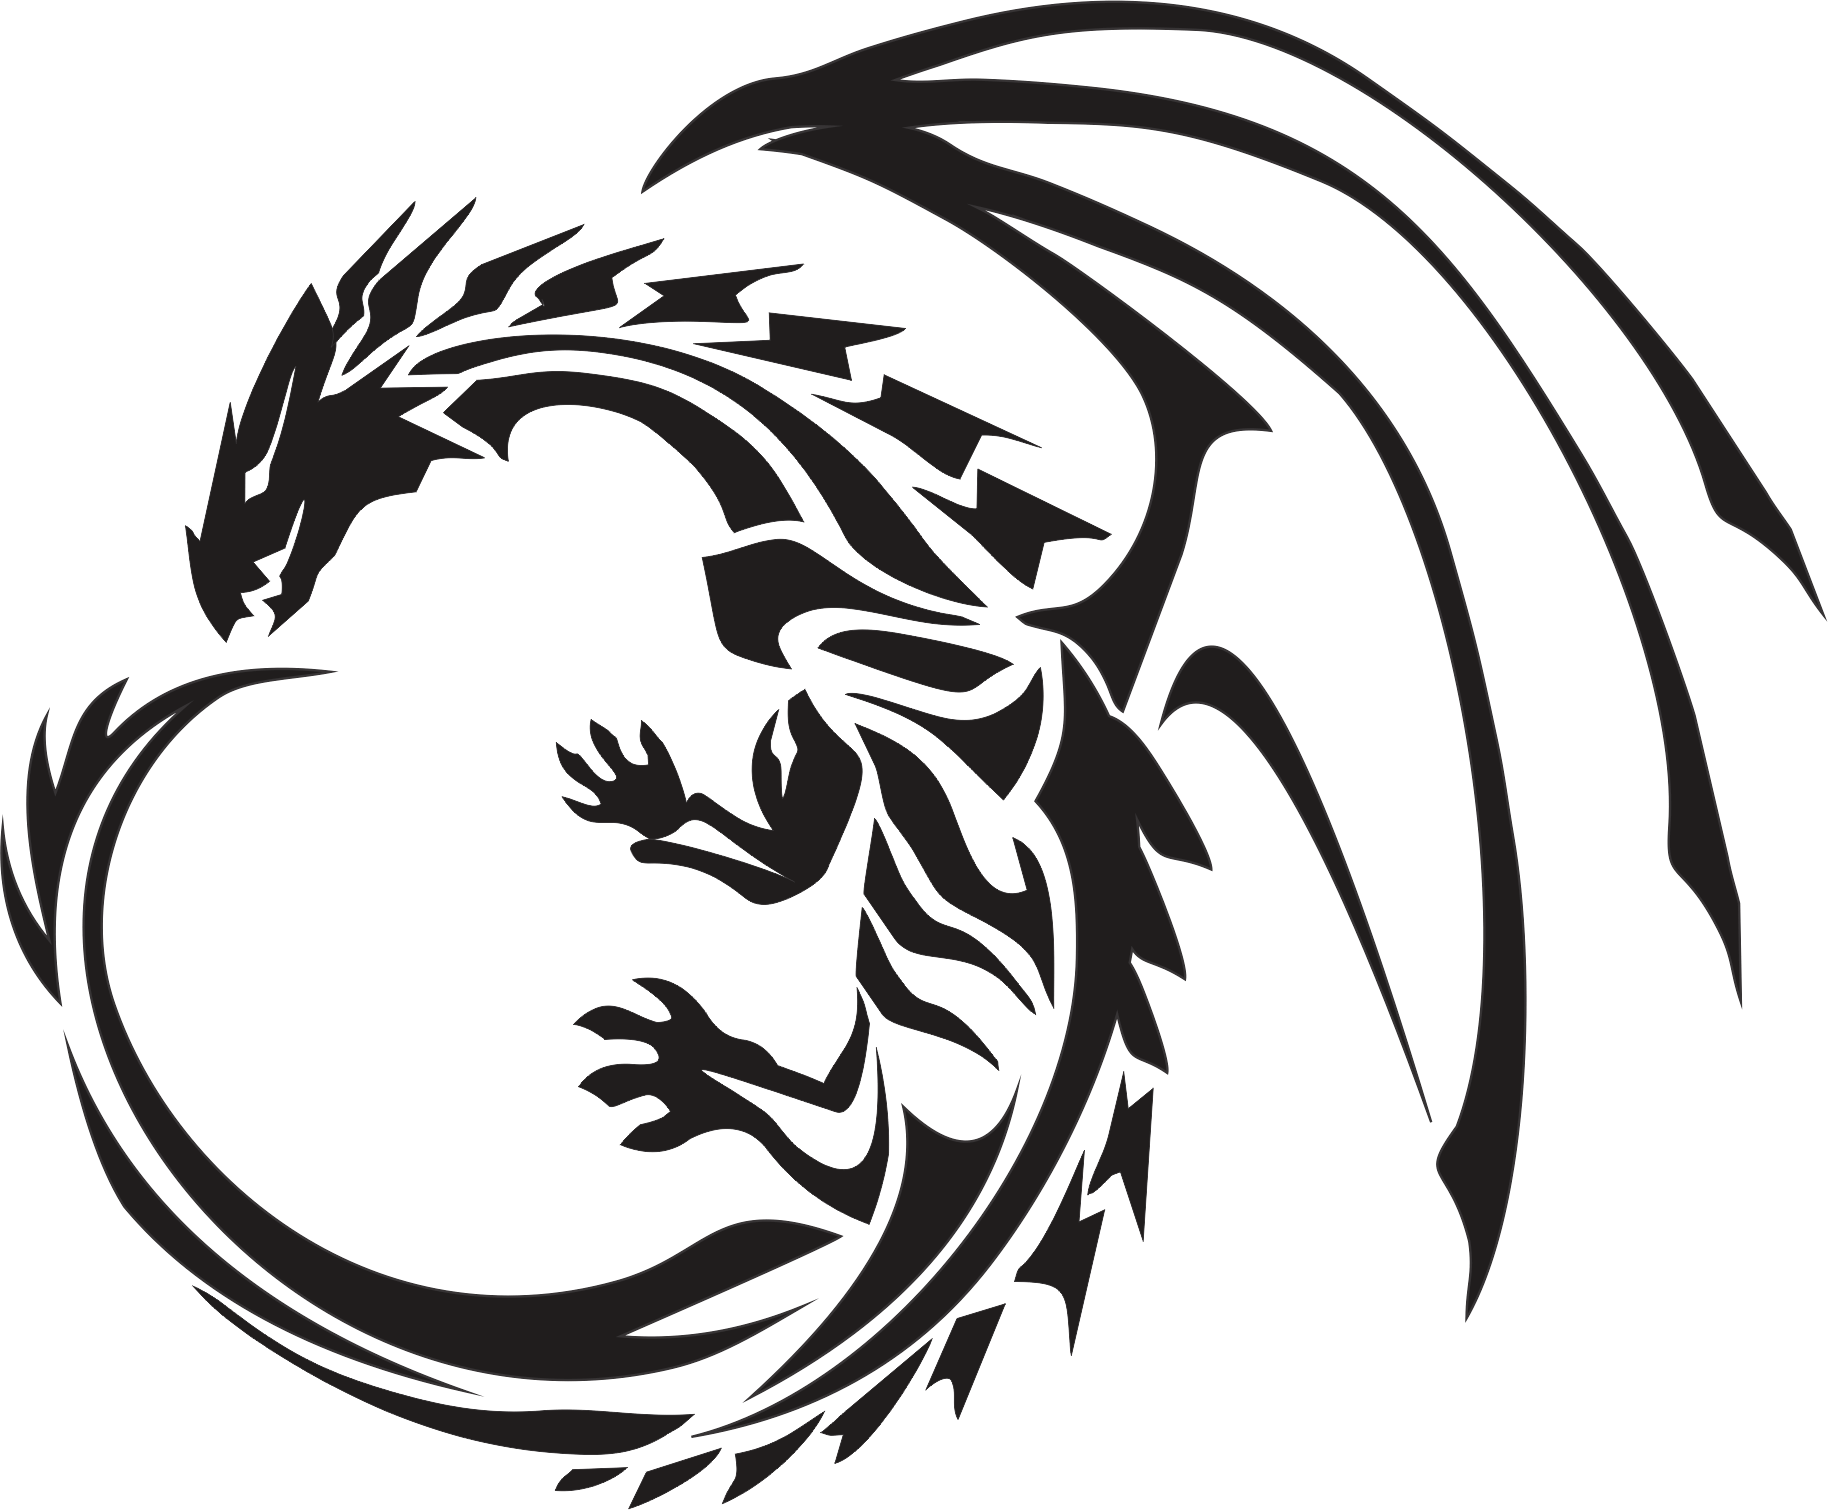 Circle dragon fond PNG image